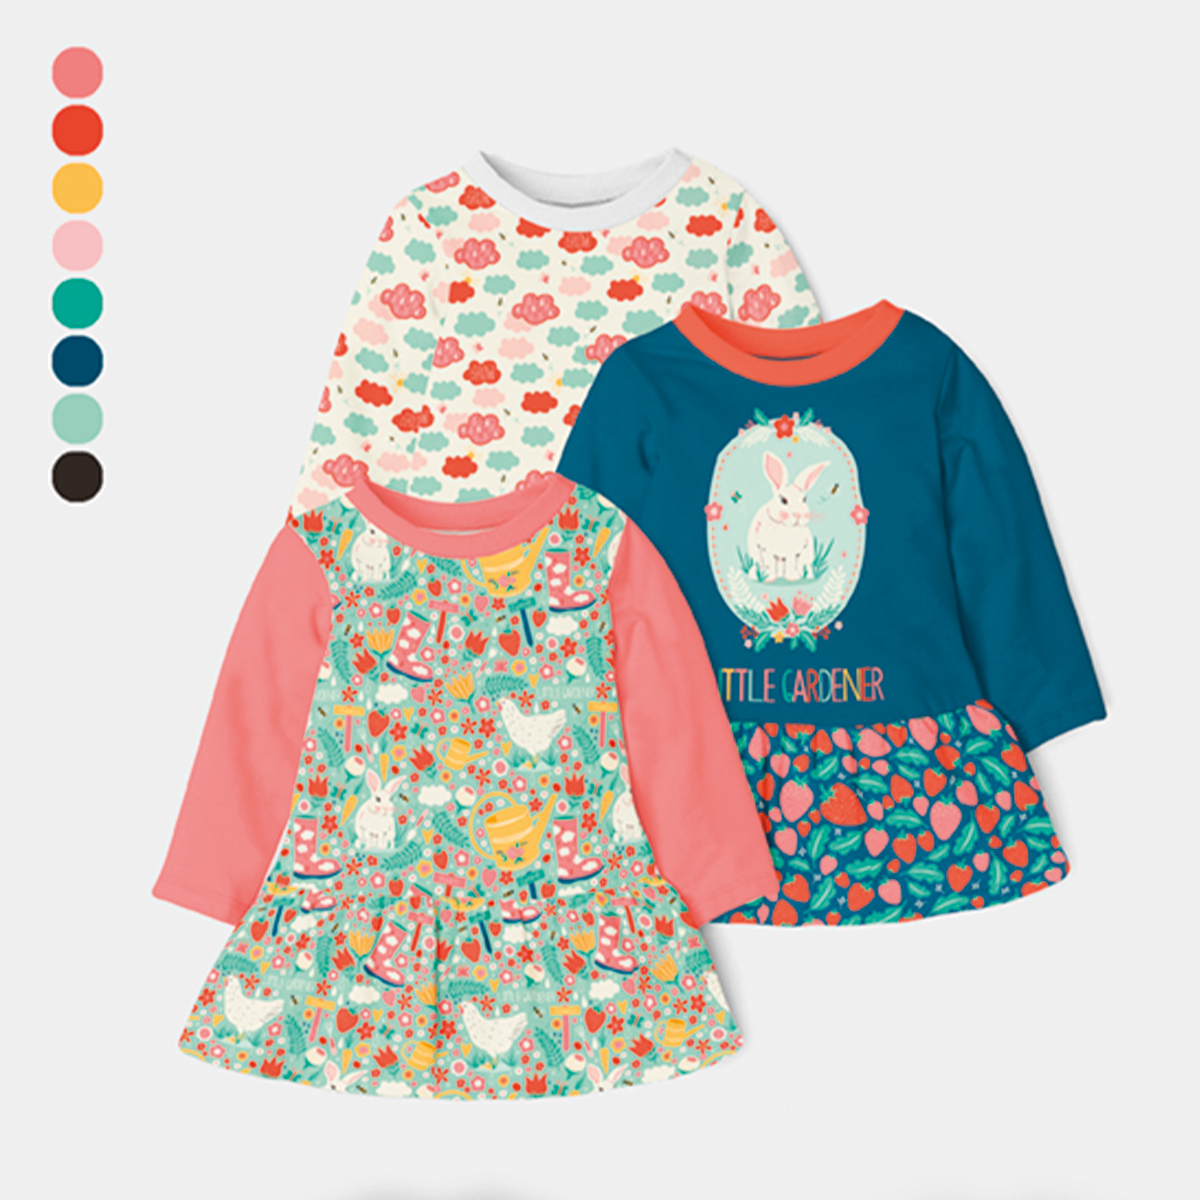 three cute dresses with little gardener pattern on, designed by poppydesign